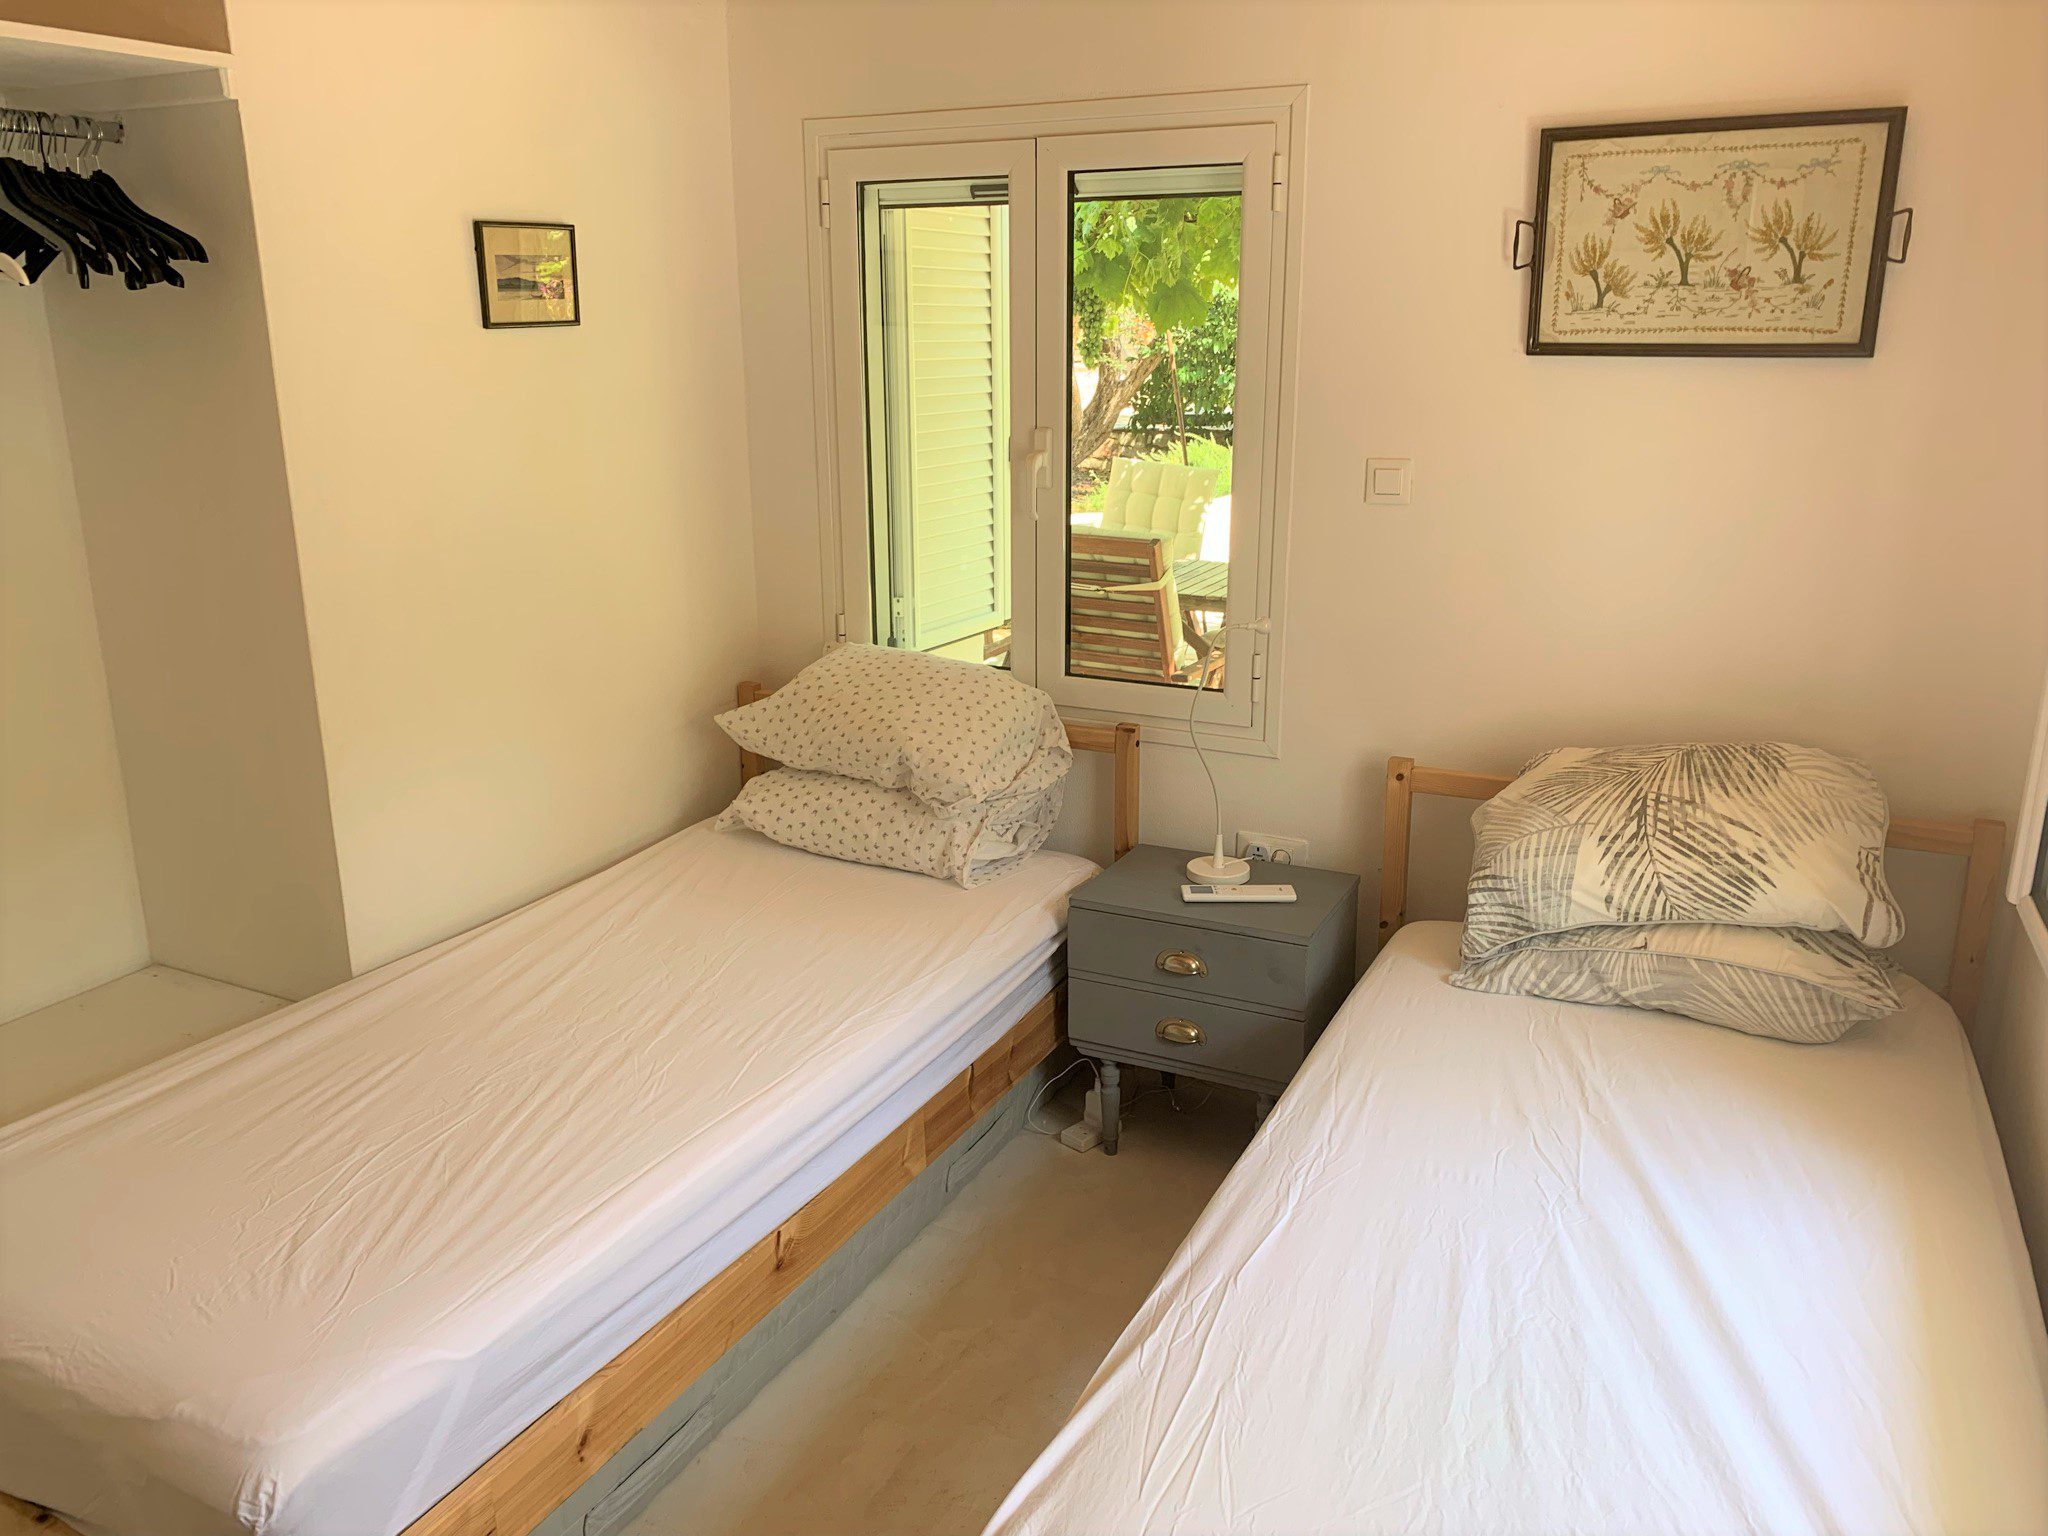 Bedroom of house for rent in Ithaca Greece, Vath